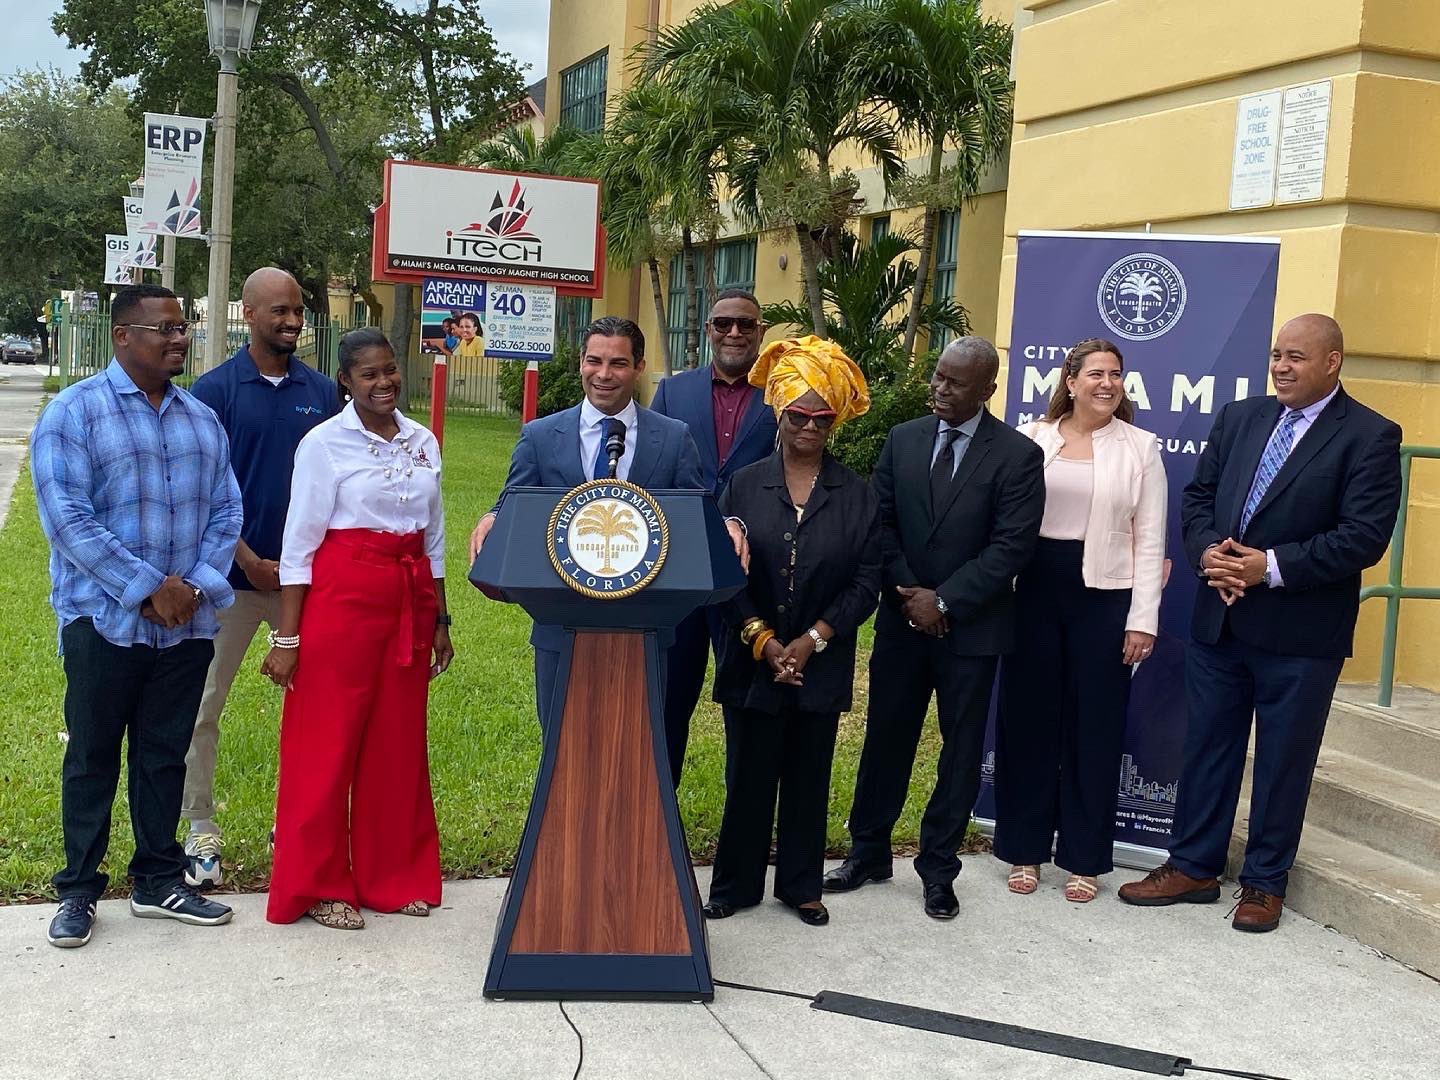 Campaña del alcalde de Miami recaudó $ 70 mil para el iTech Magnet High School